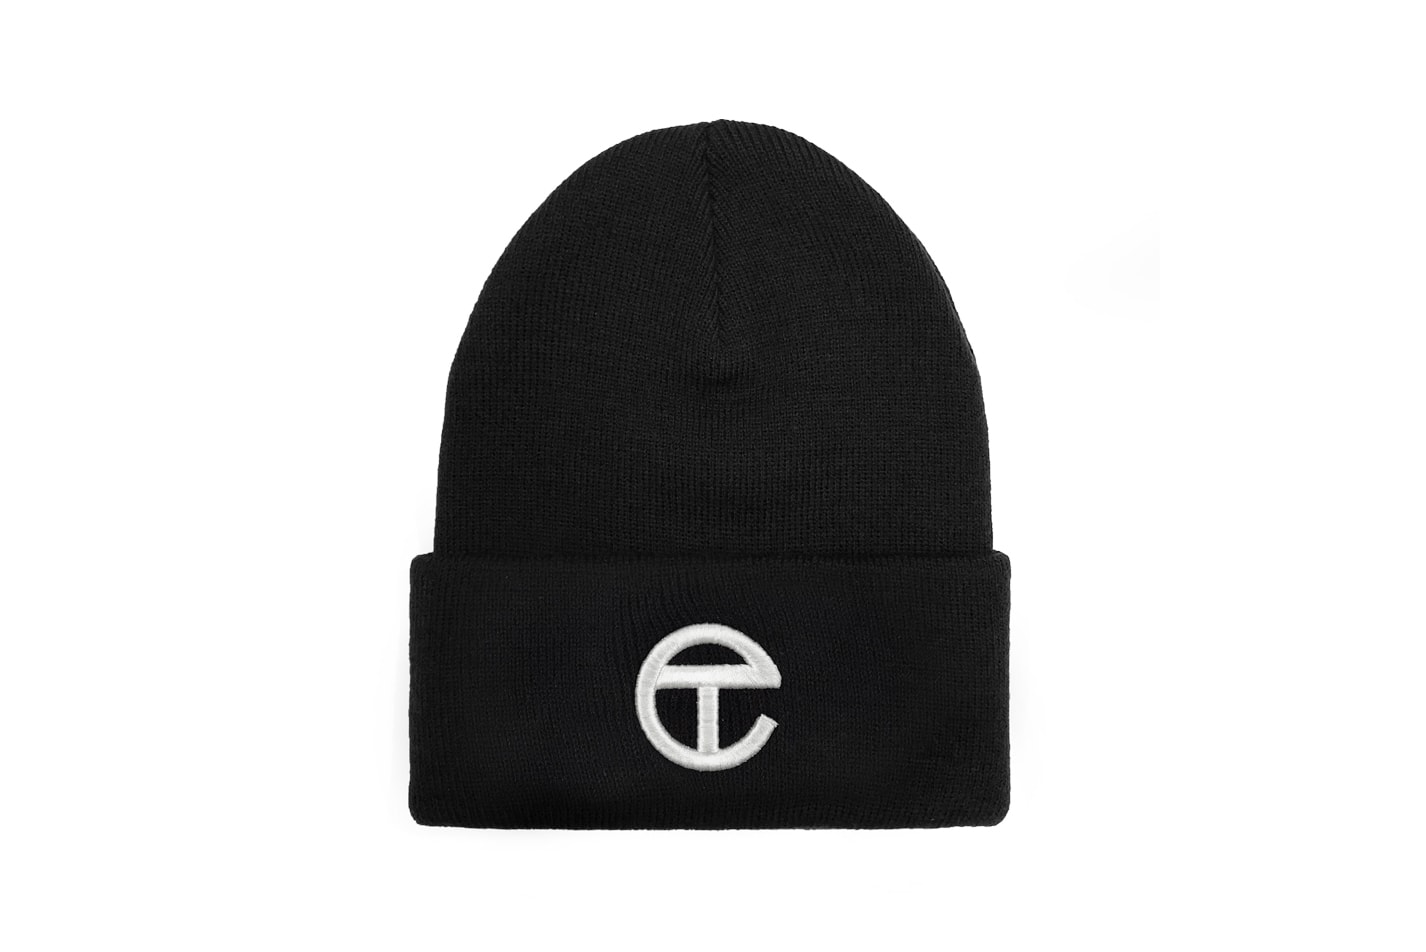 Telfar Logo Beanie Black White Hat